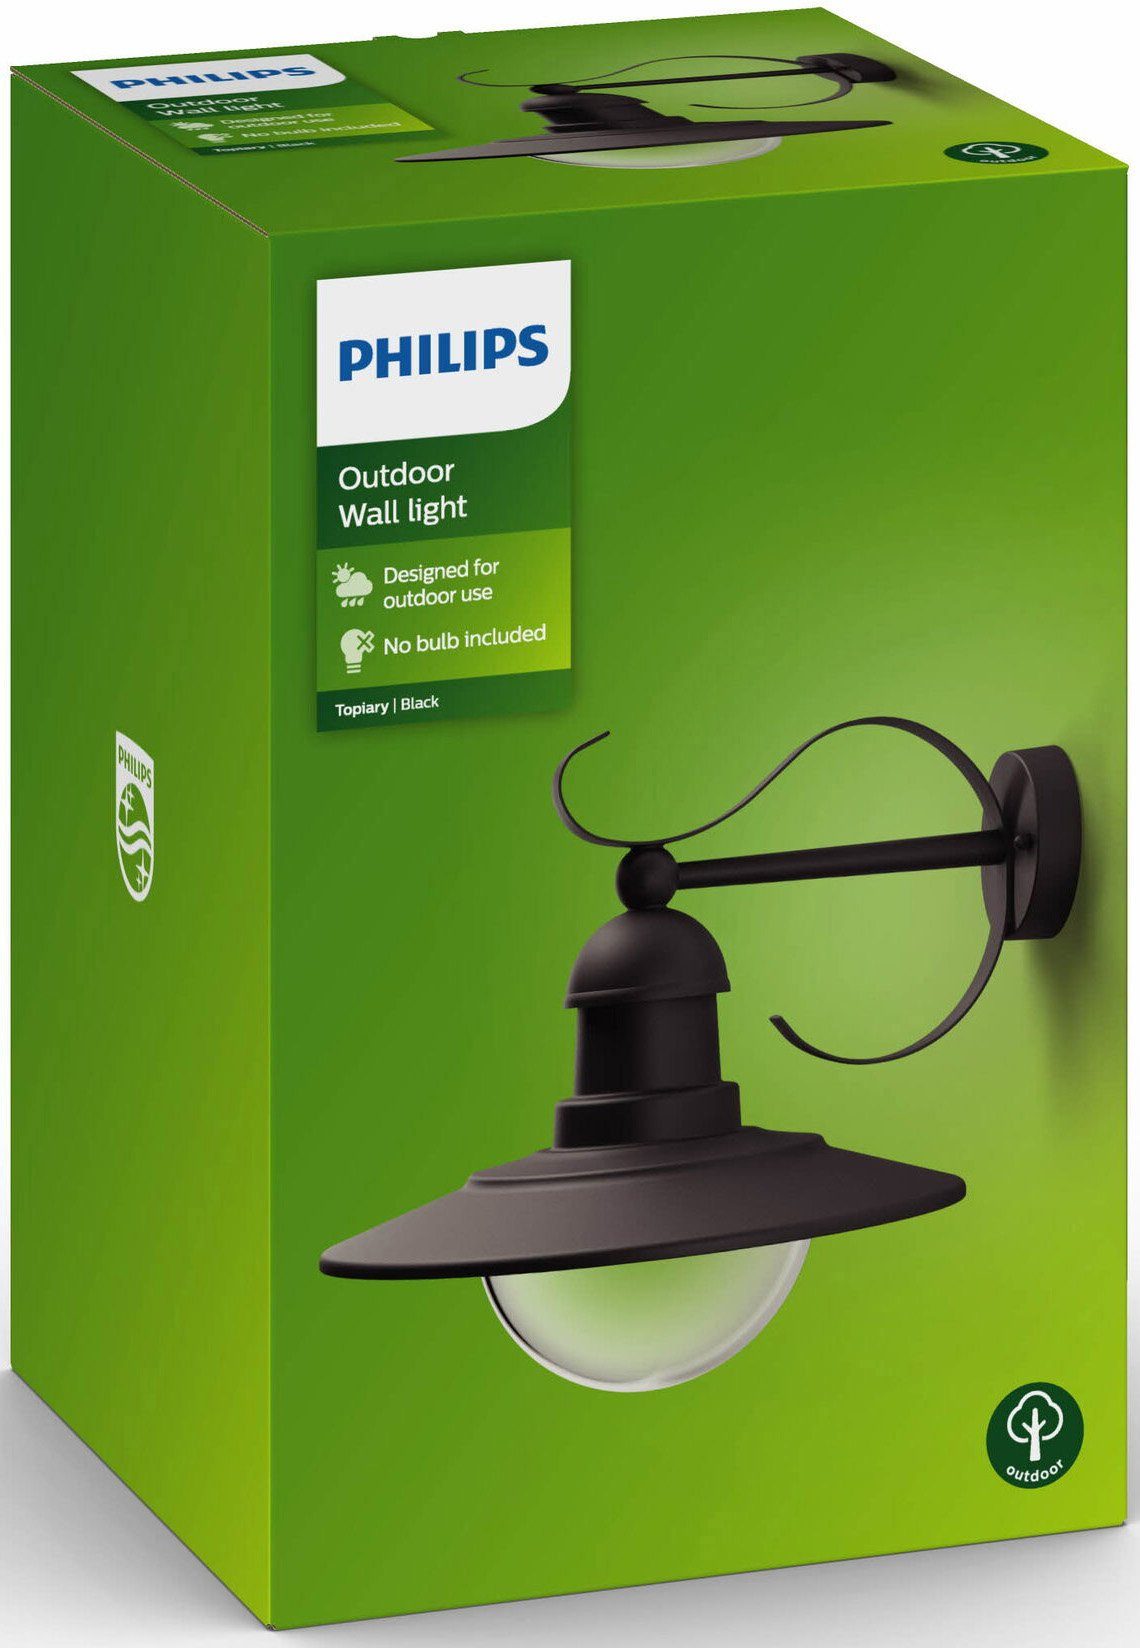 exkl LM Philips wechselbar, Schwarz LED Topiary, Wandleuchte Wandleuchte BE 1x60W